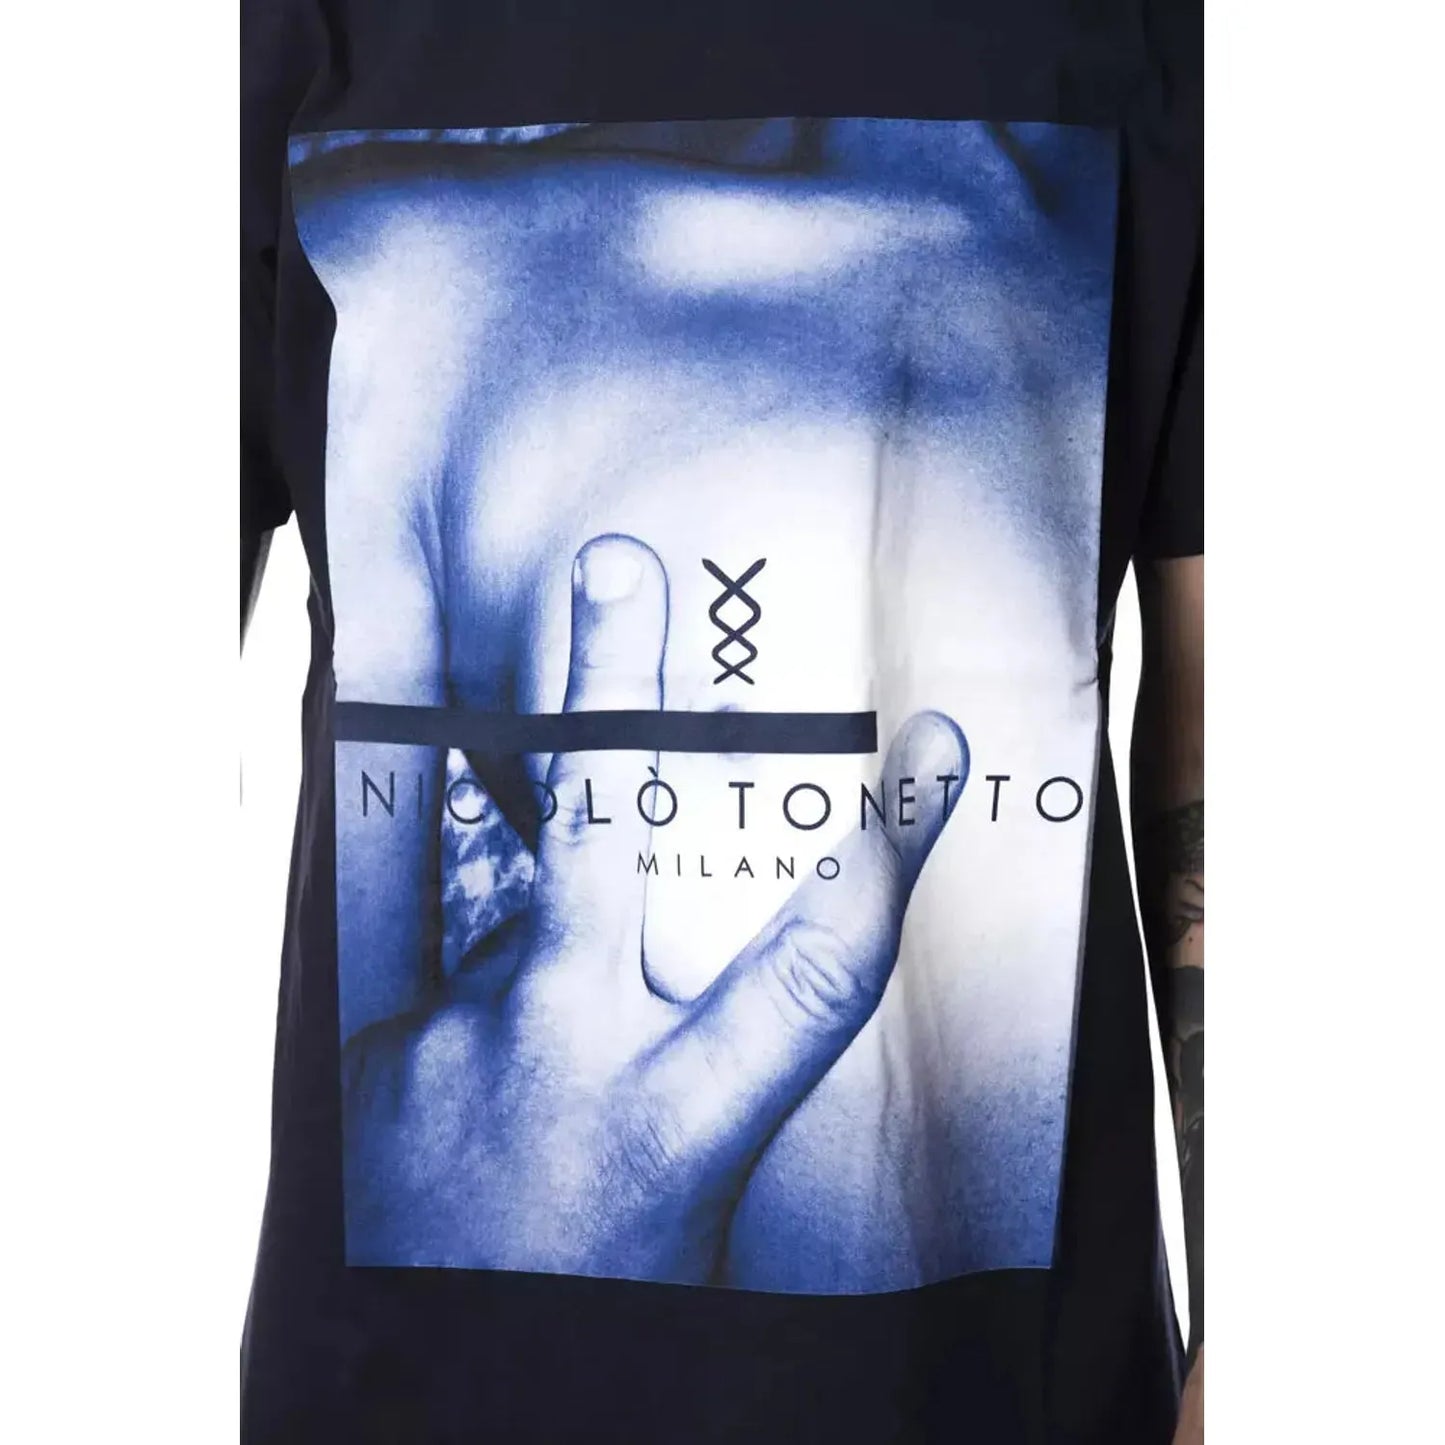 Nicolo Tonetto Elegant Blue Cotton Tee with Chic Print blu-navy-t-shirt-3